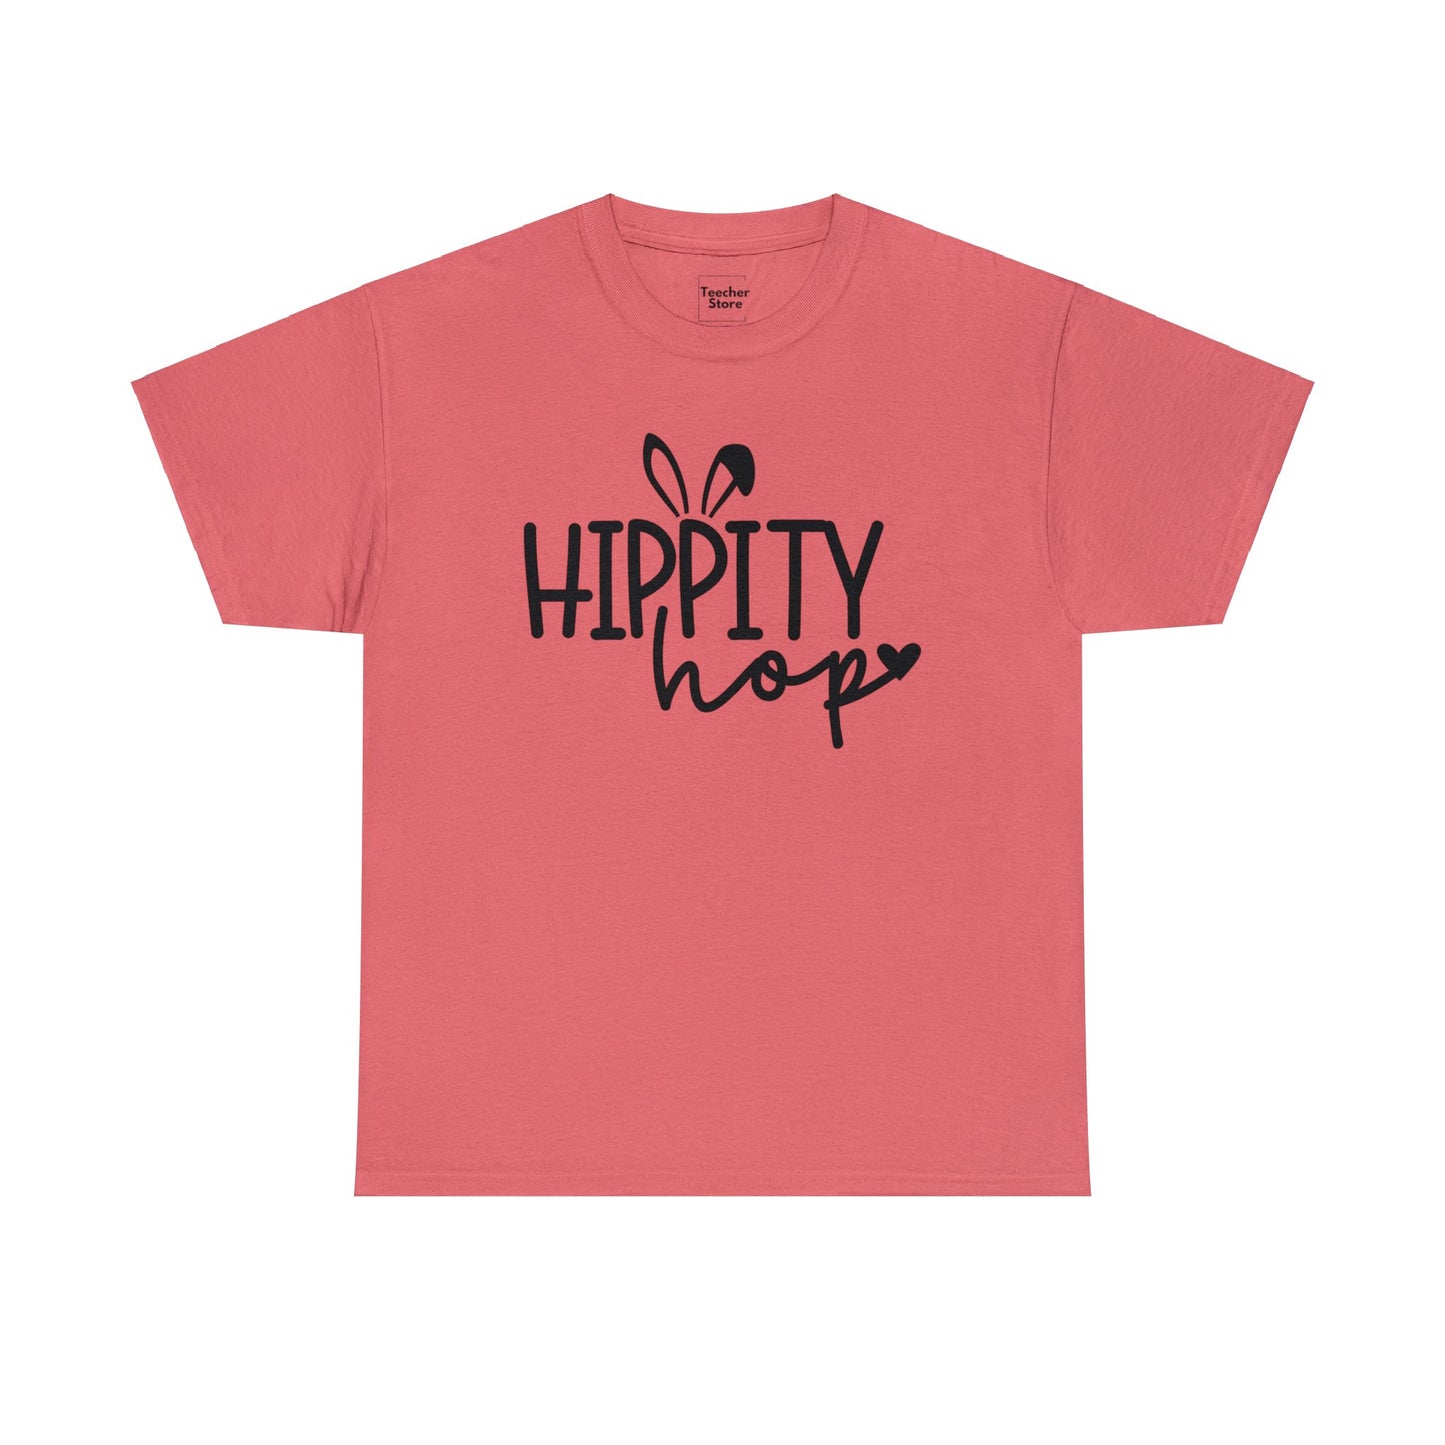 Hippity Hop Tee-Shirt